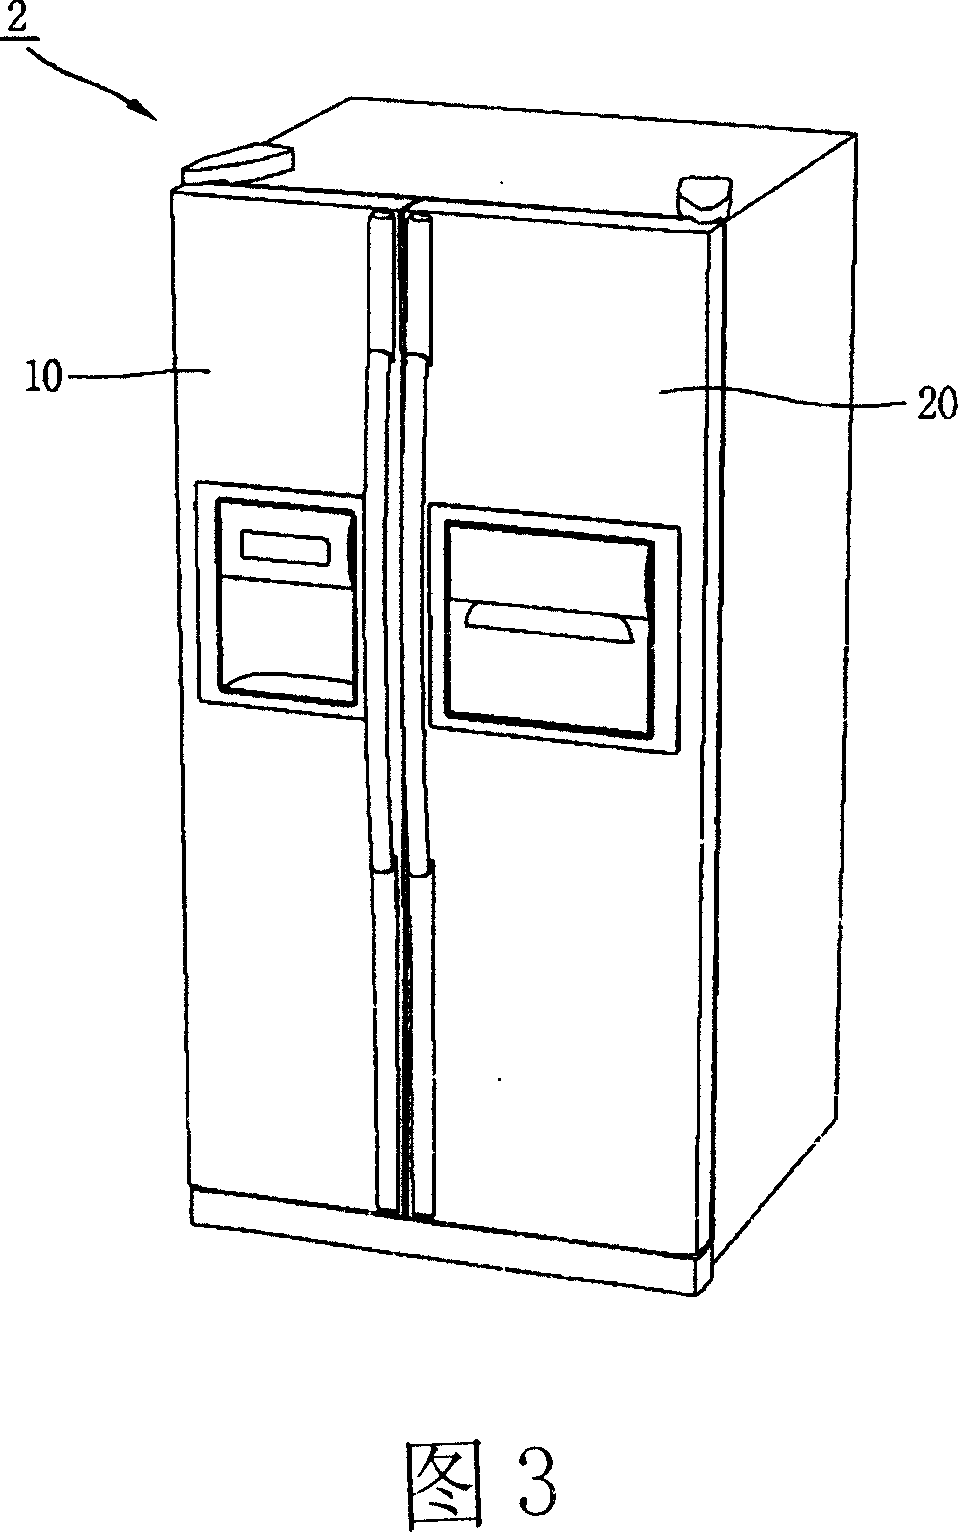 Assembled refrigerator